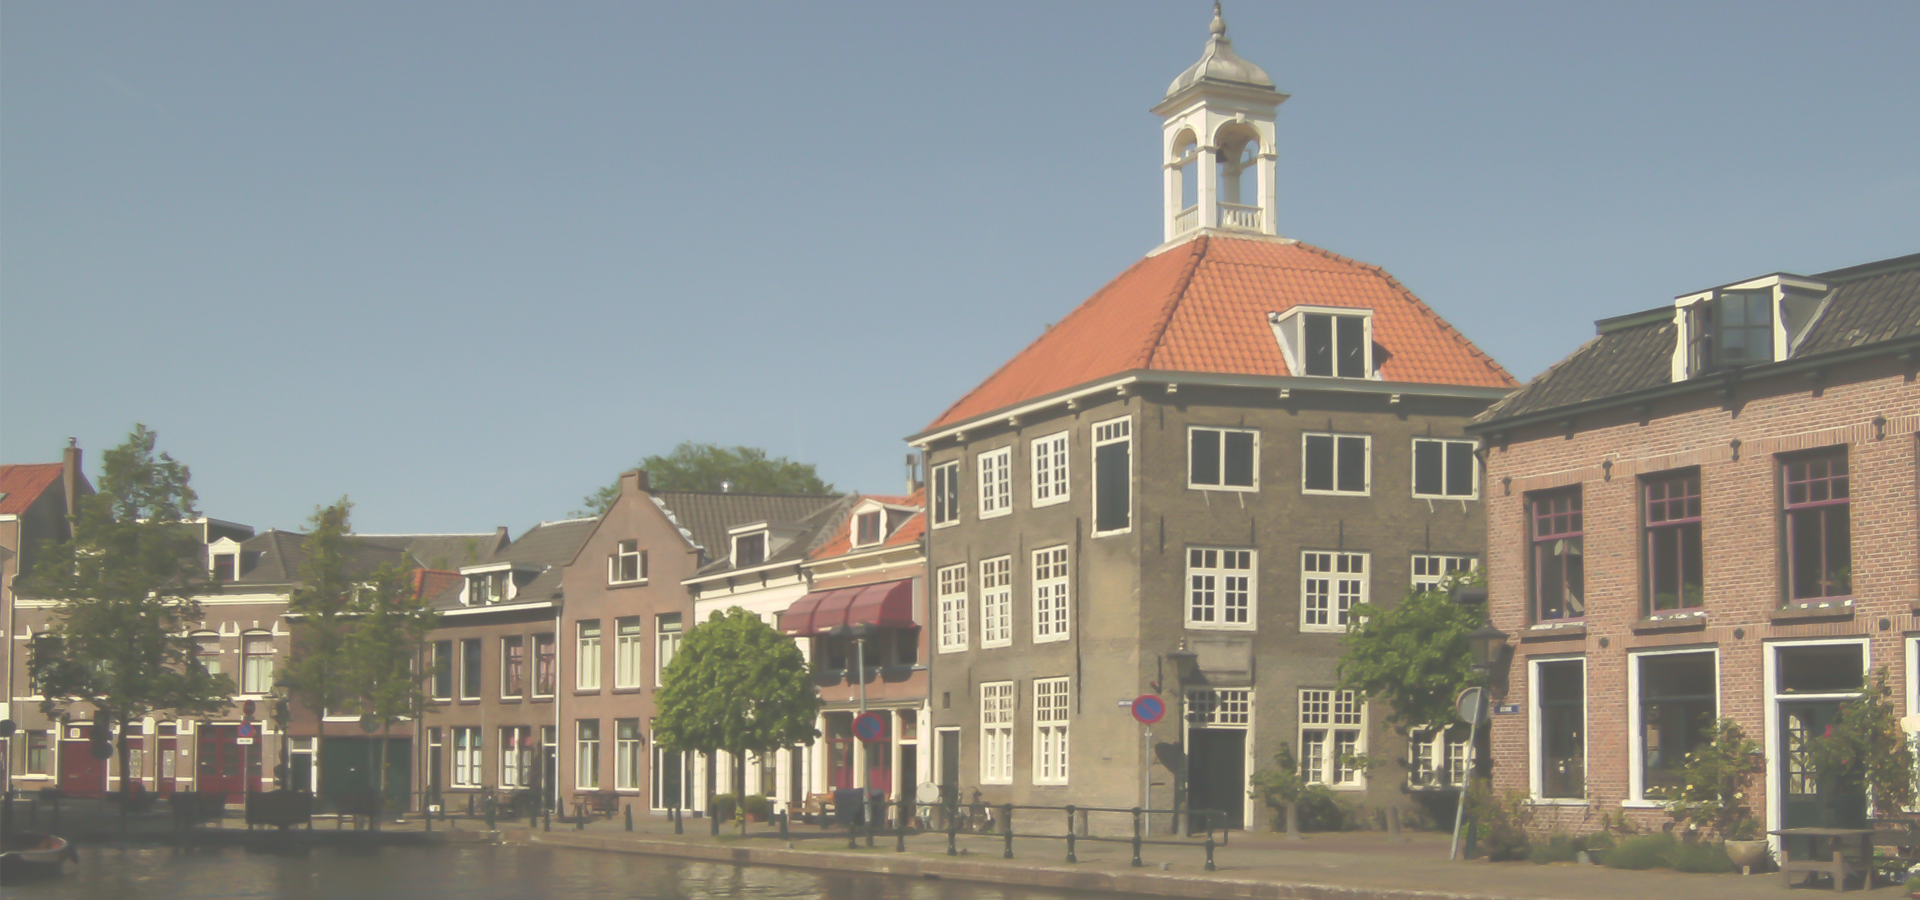 <b>Schiedam, South Holland, Netherlands</b>